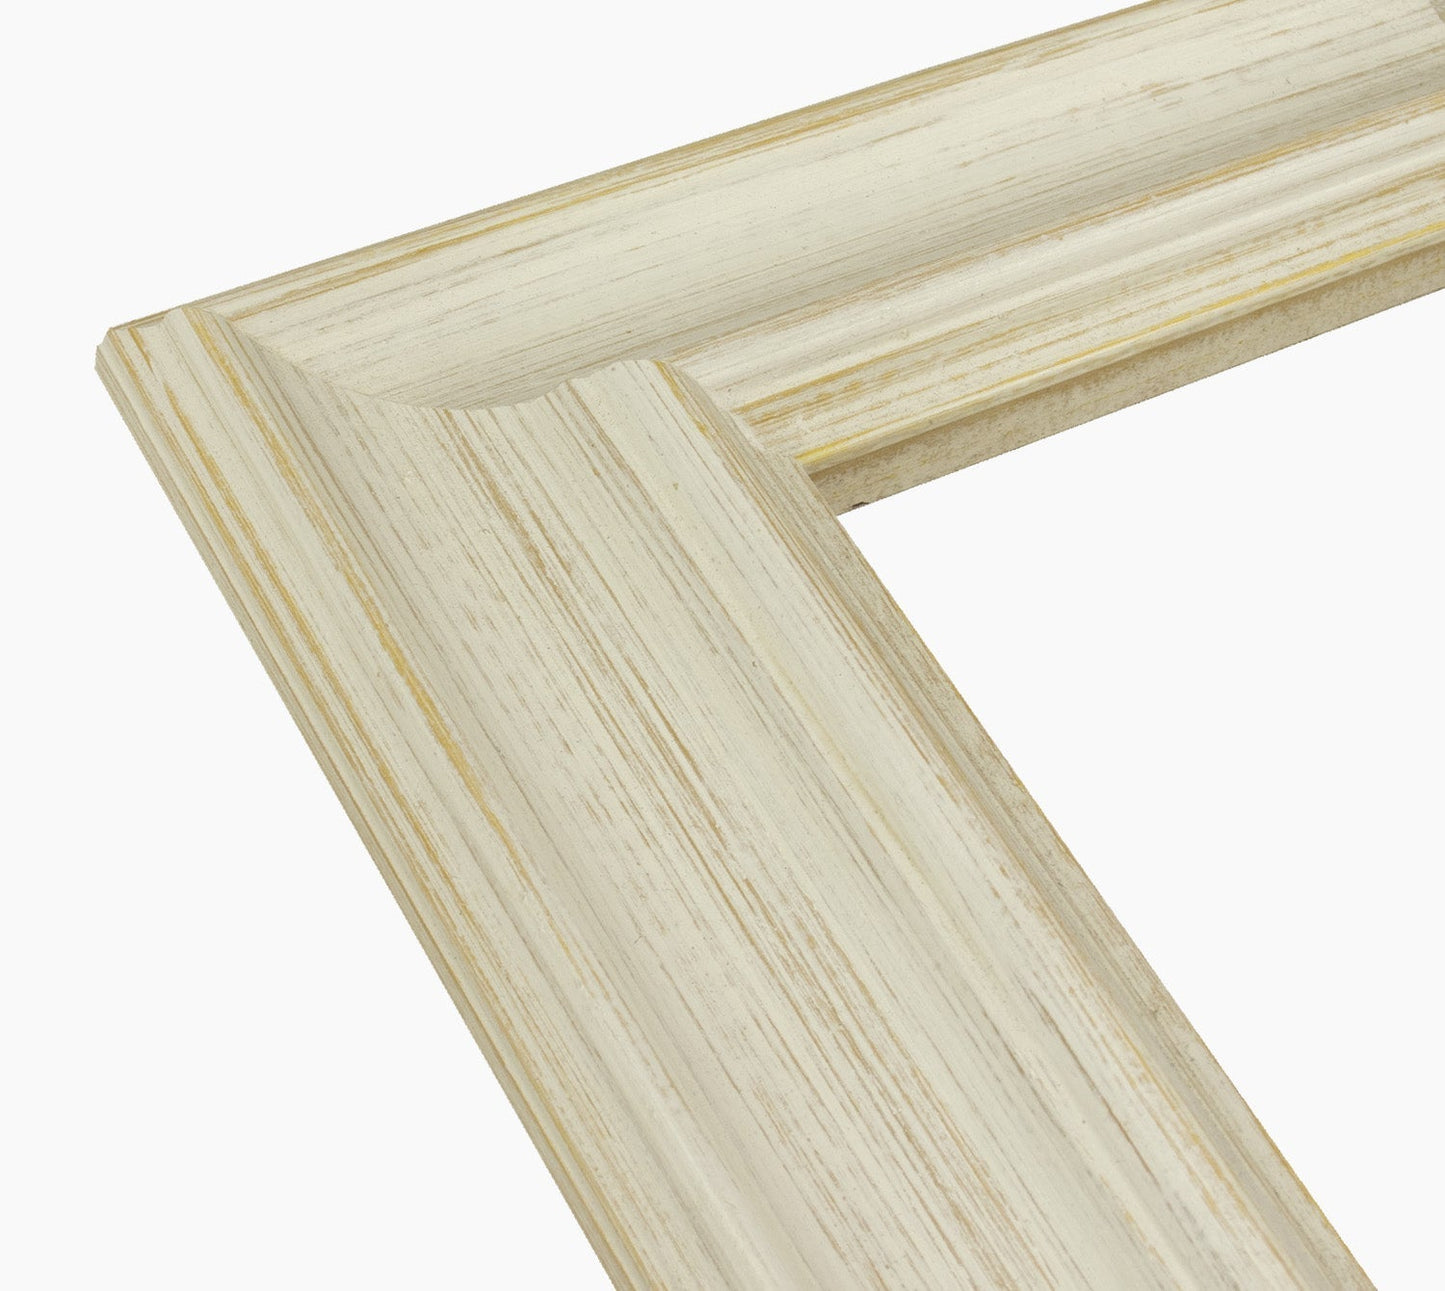 739.915 cadre en bois à fond ocre blanc mesure de profil 80x45 mm Lombarda cornici S.n.c.